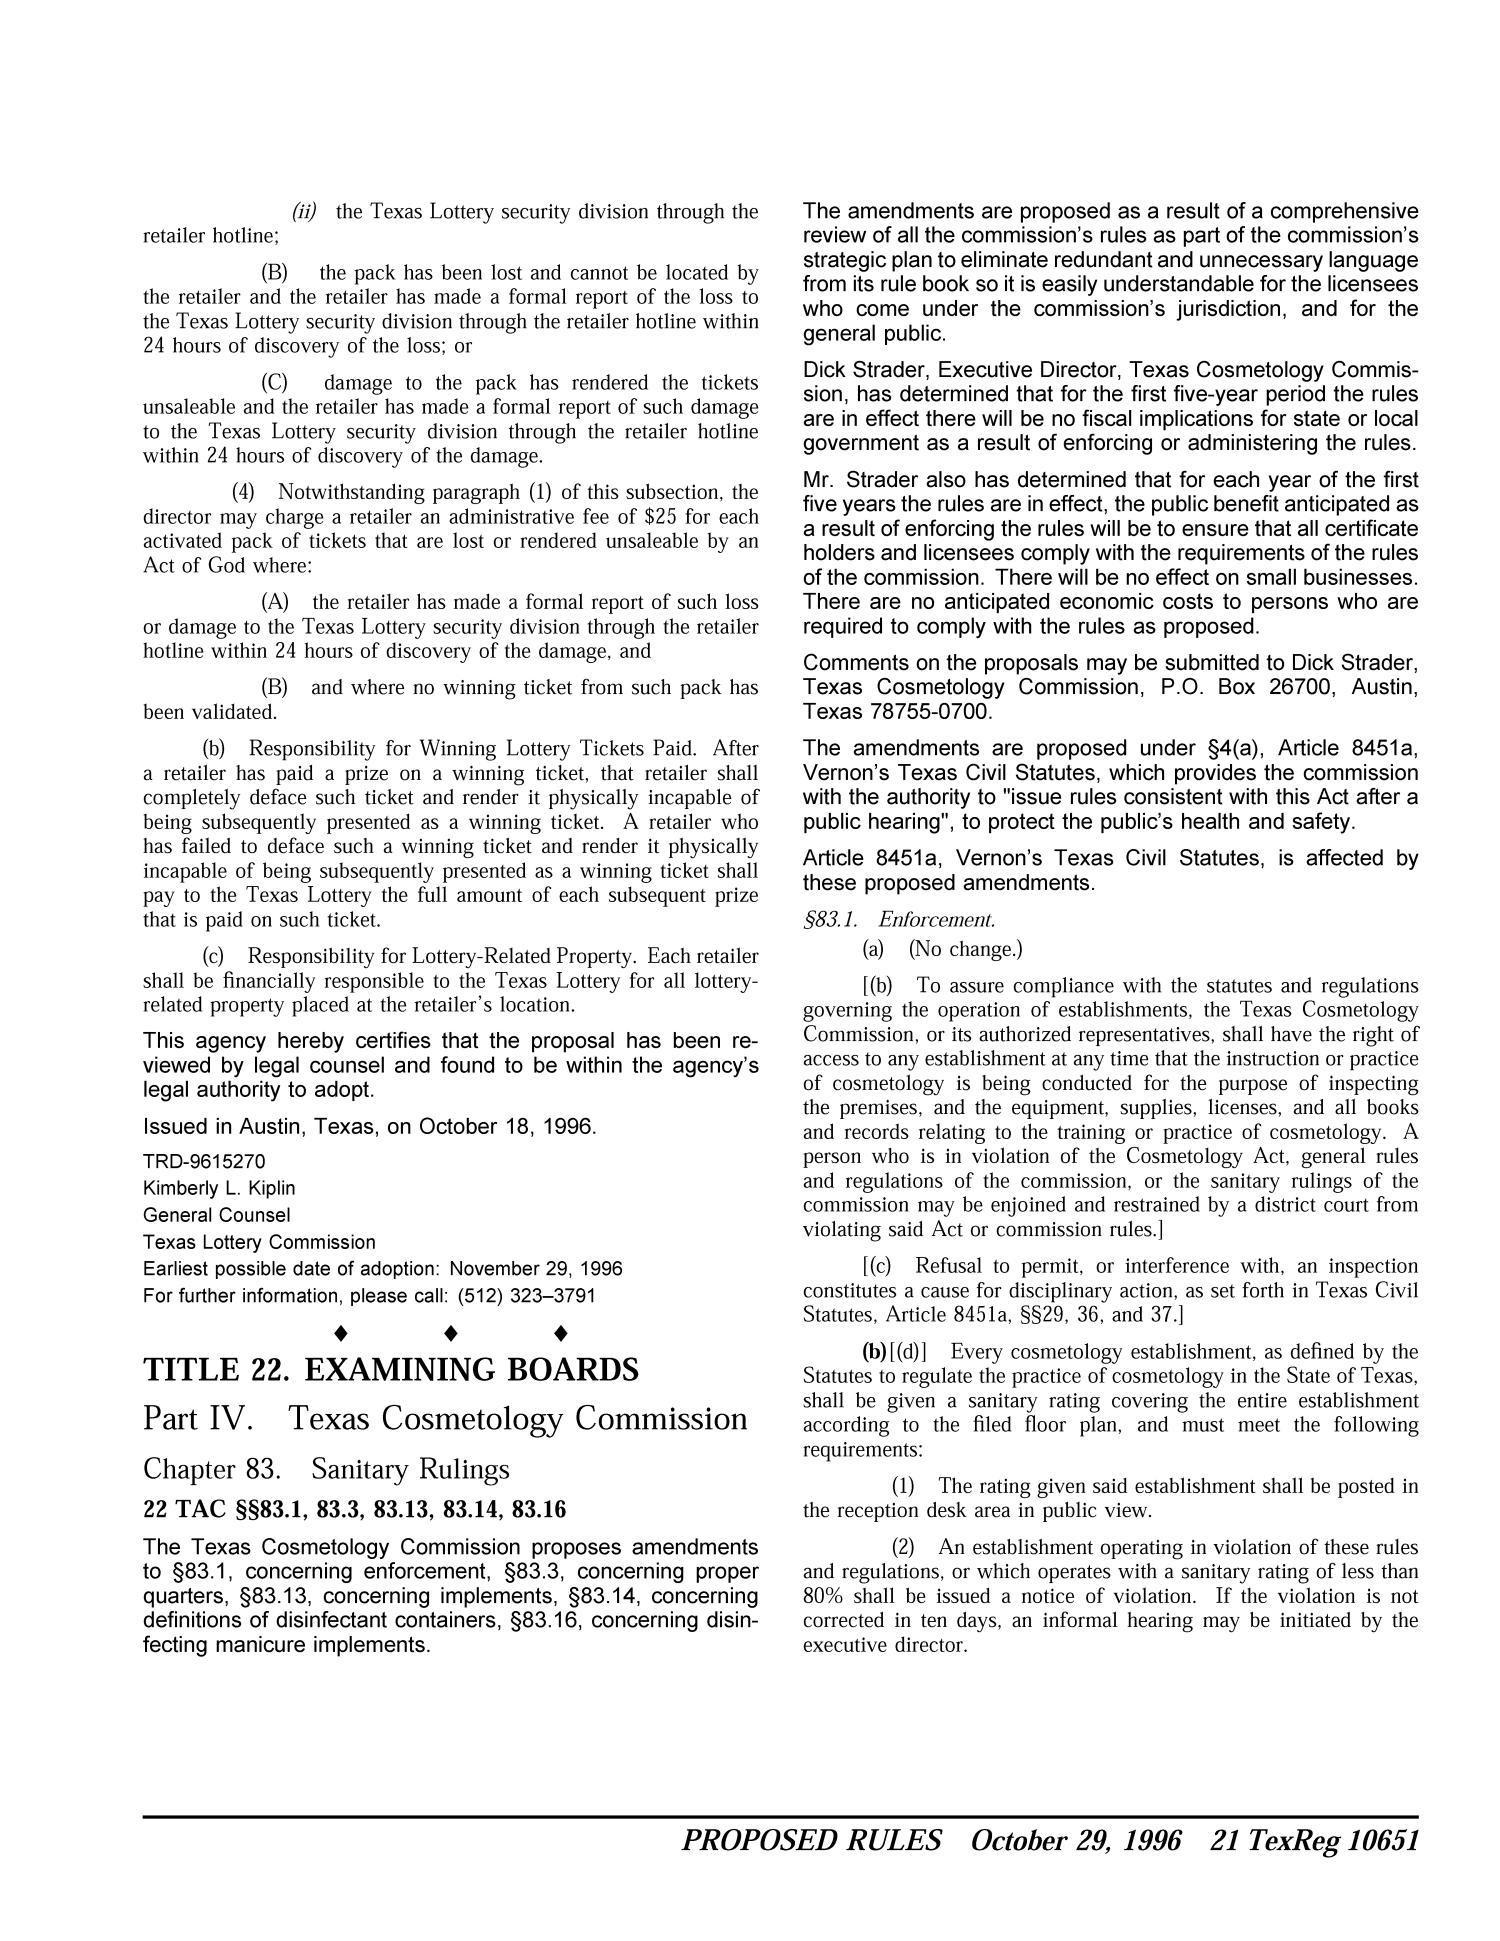 Texas Register, Volume 21, Number 80, Pages 10639-10789, October 29, 1996
                                                
                                                    10651
                                                